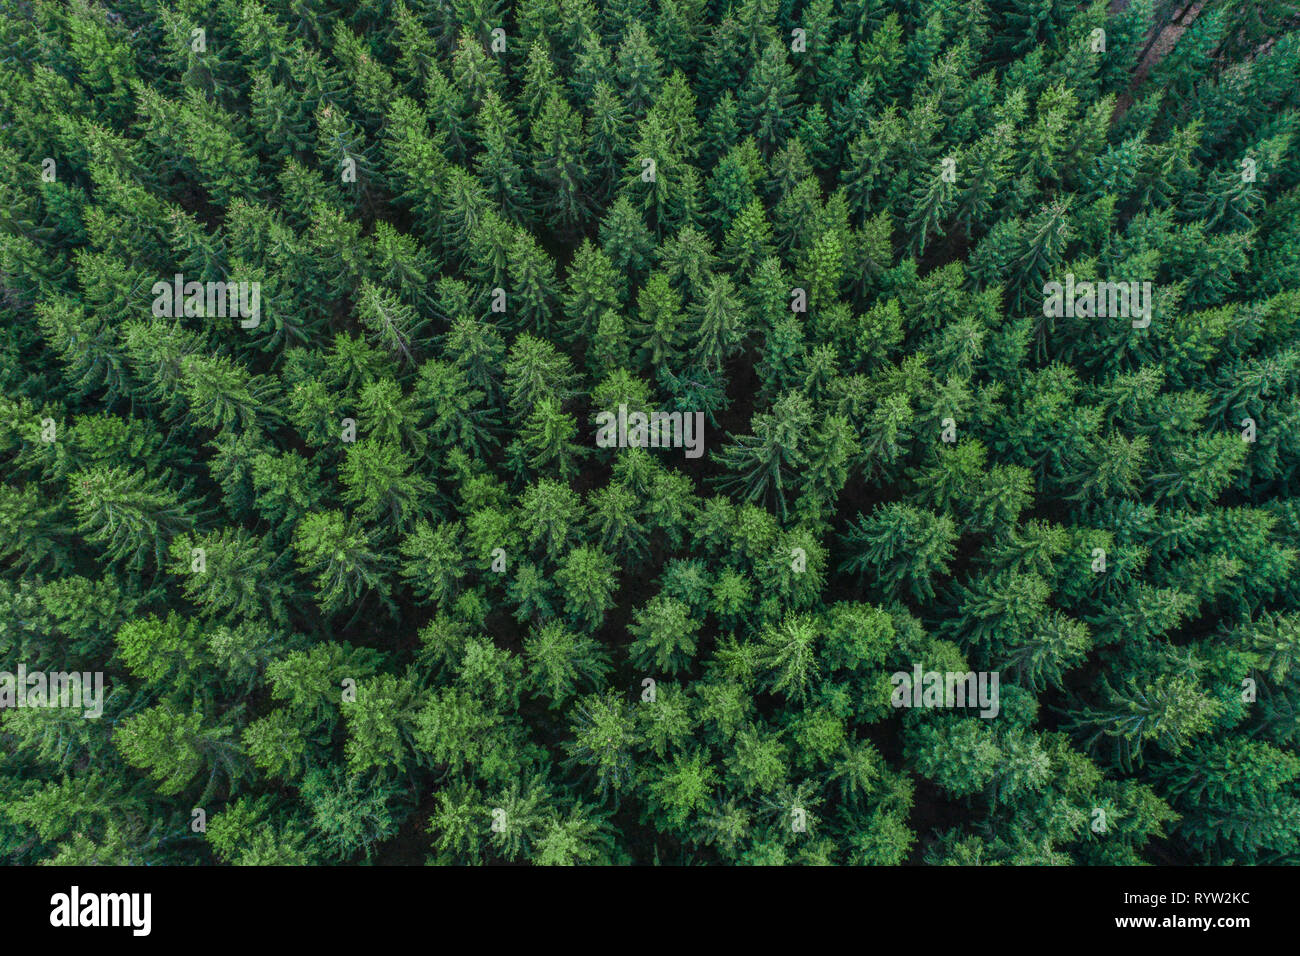 Grüne Nadelbäume Baumkronen im Wald - Luftbild, Deutschland Stockfoto